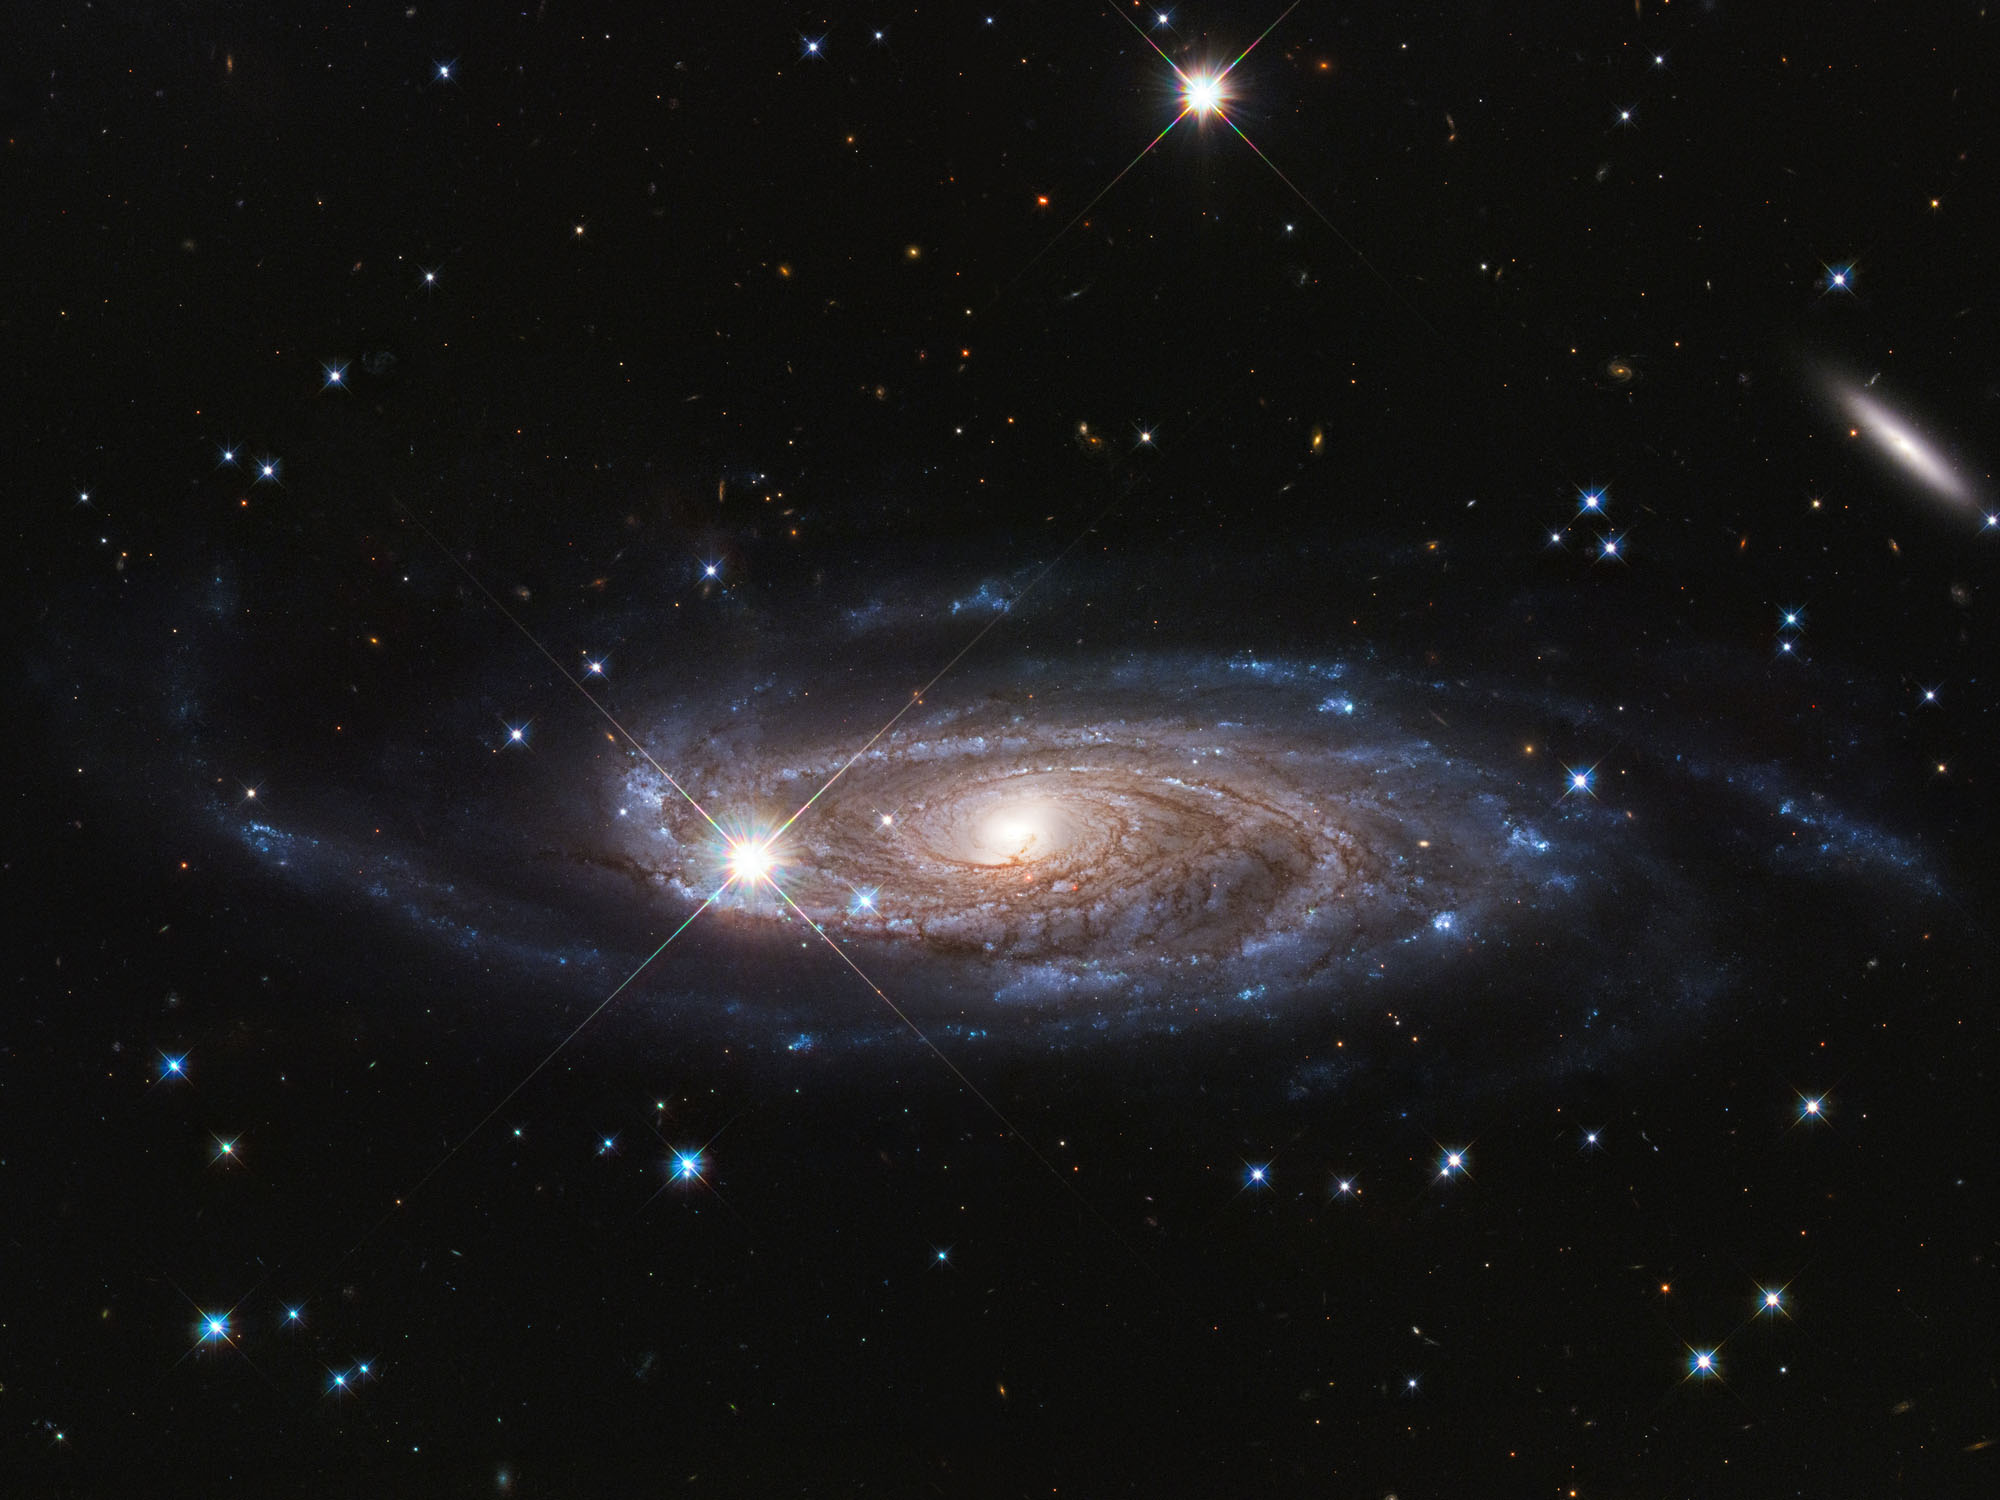 Spiral galaxy UGC 2885, also known as Rubin's Galaxy